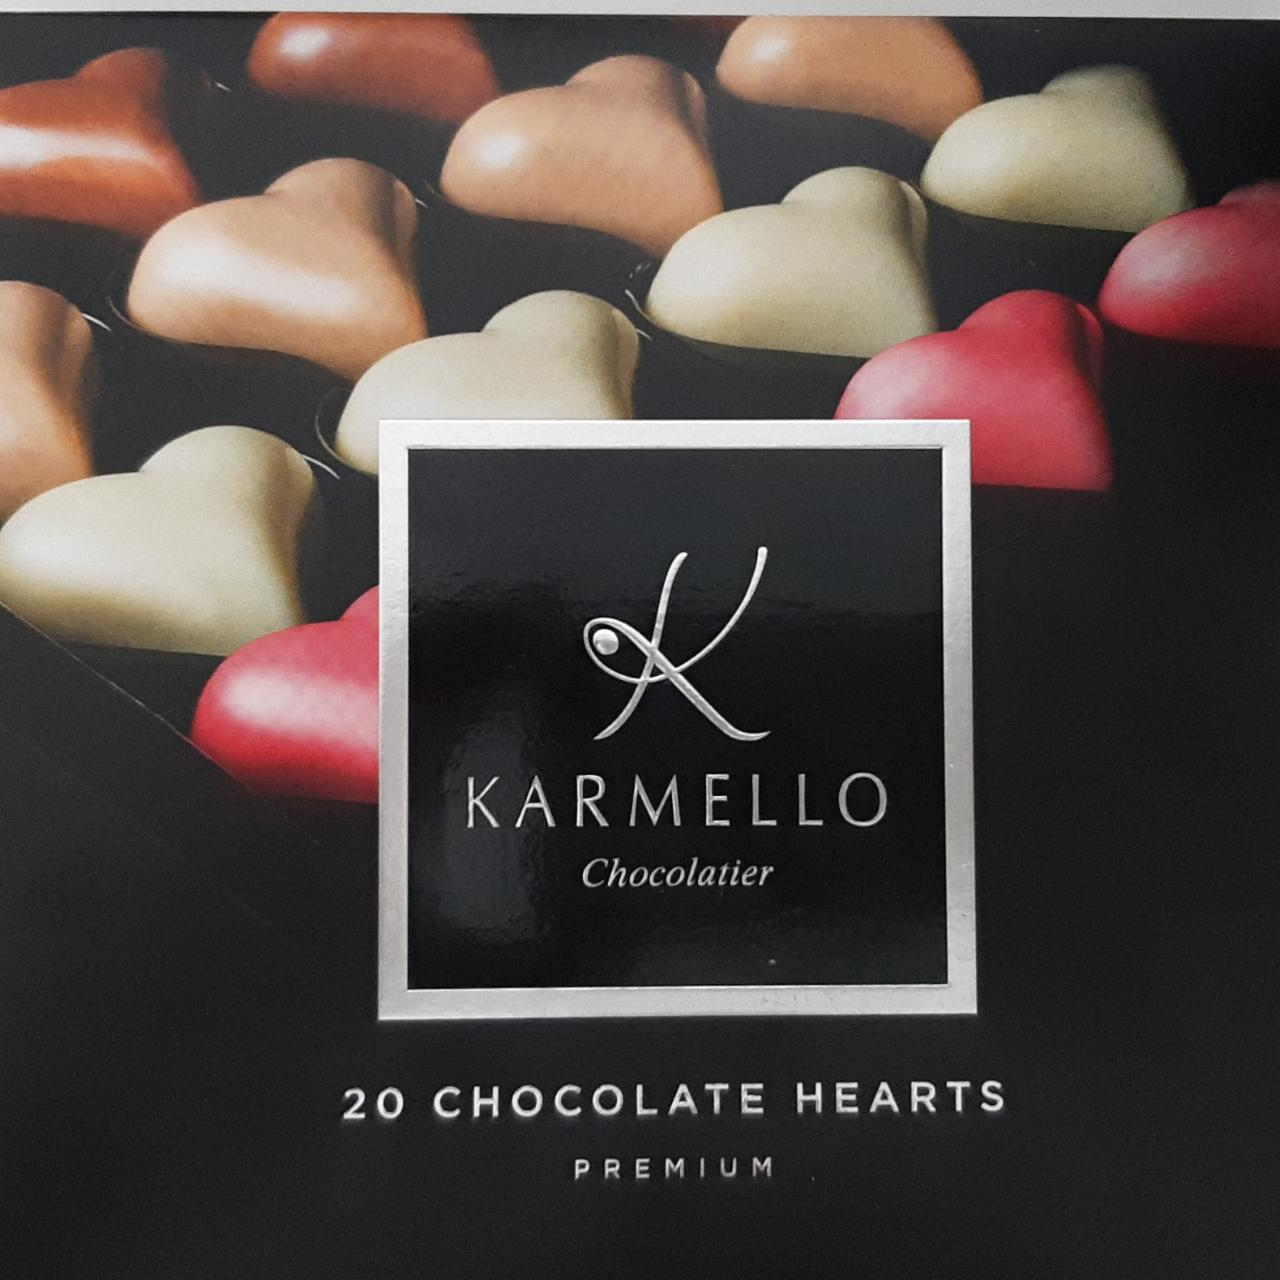 Fotografie - Karmello chocolatier 20 Chocolate Hearts Premium